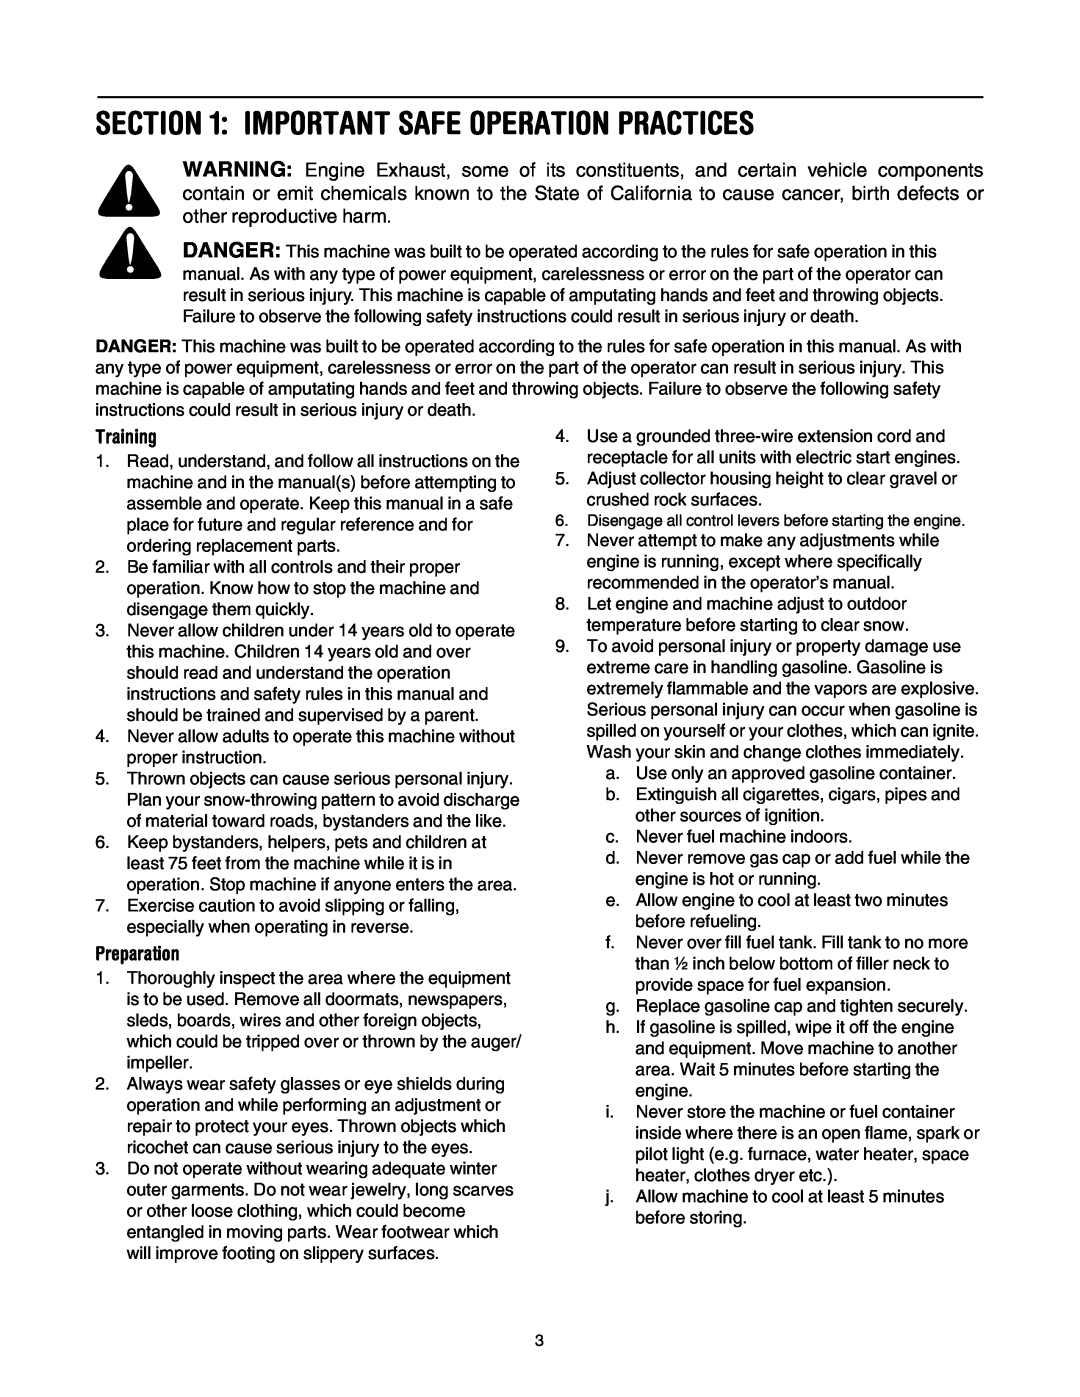 MTD 6DE manual Important Safe Operation Practices, Training, Preparation 